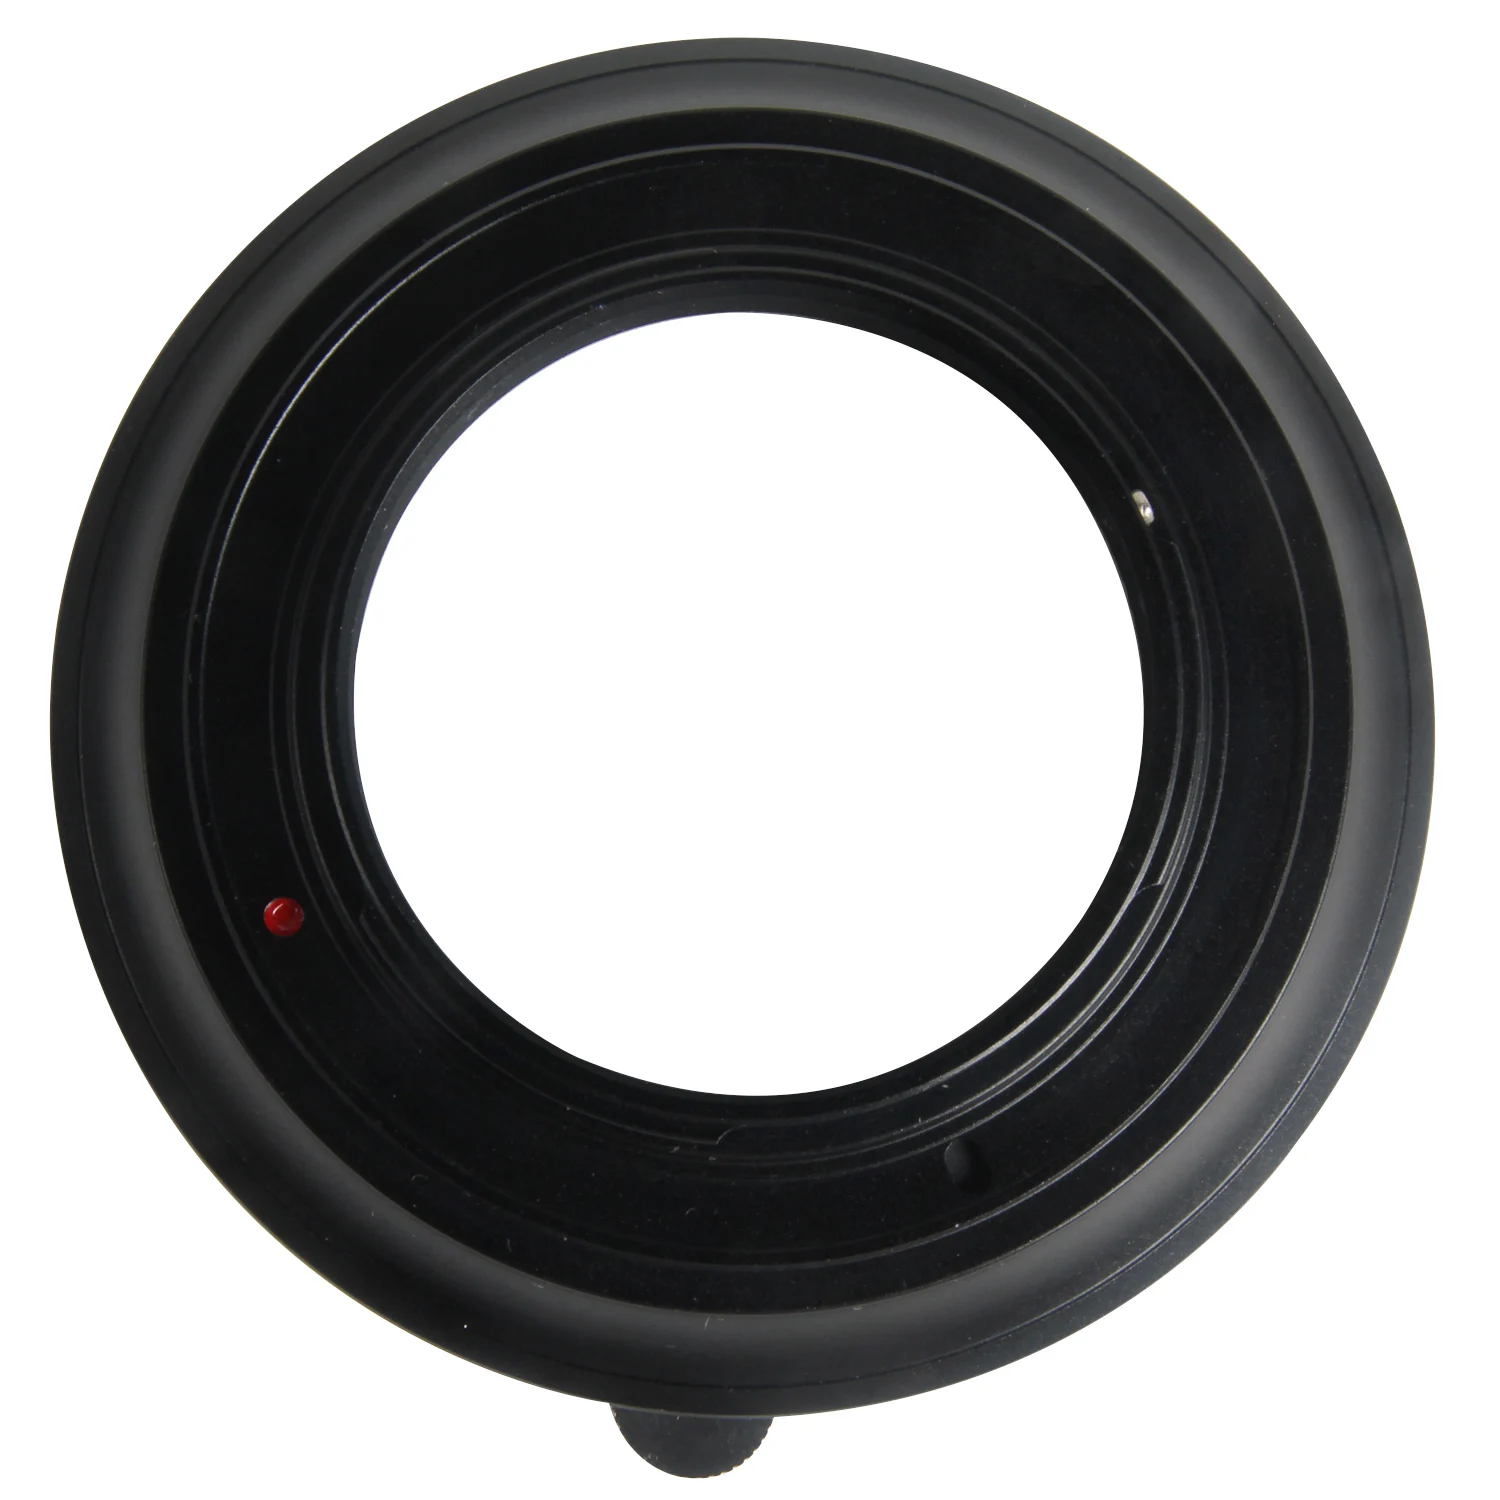 Адаптер объектива Mamiya 645 M645 для камеры Nikon F AI D60 D50 D40 D7100 D7000 D800 от AliExpress RU&CIS NEW